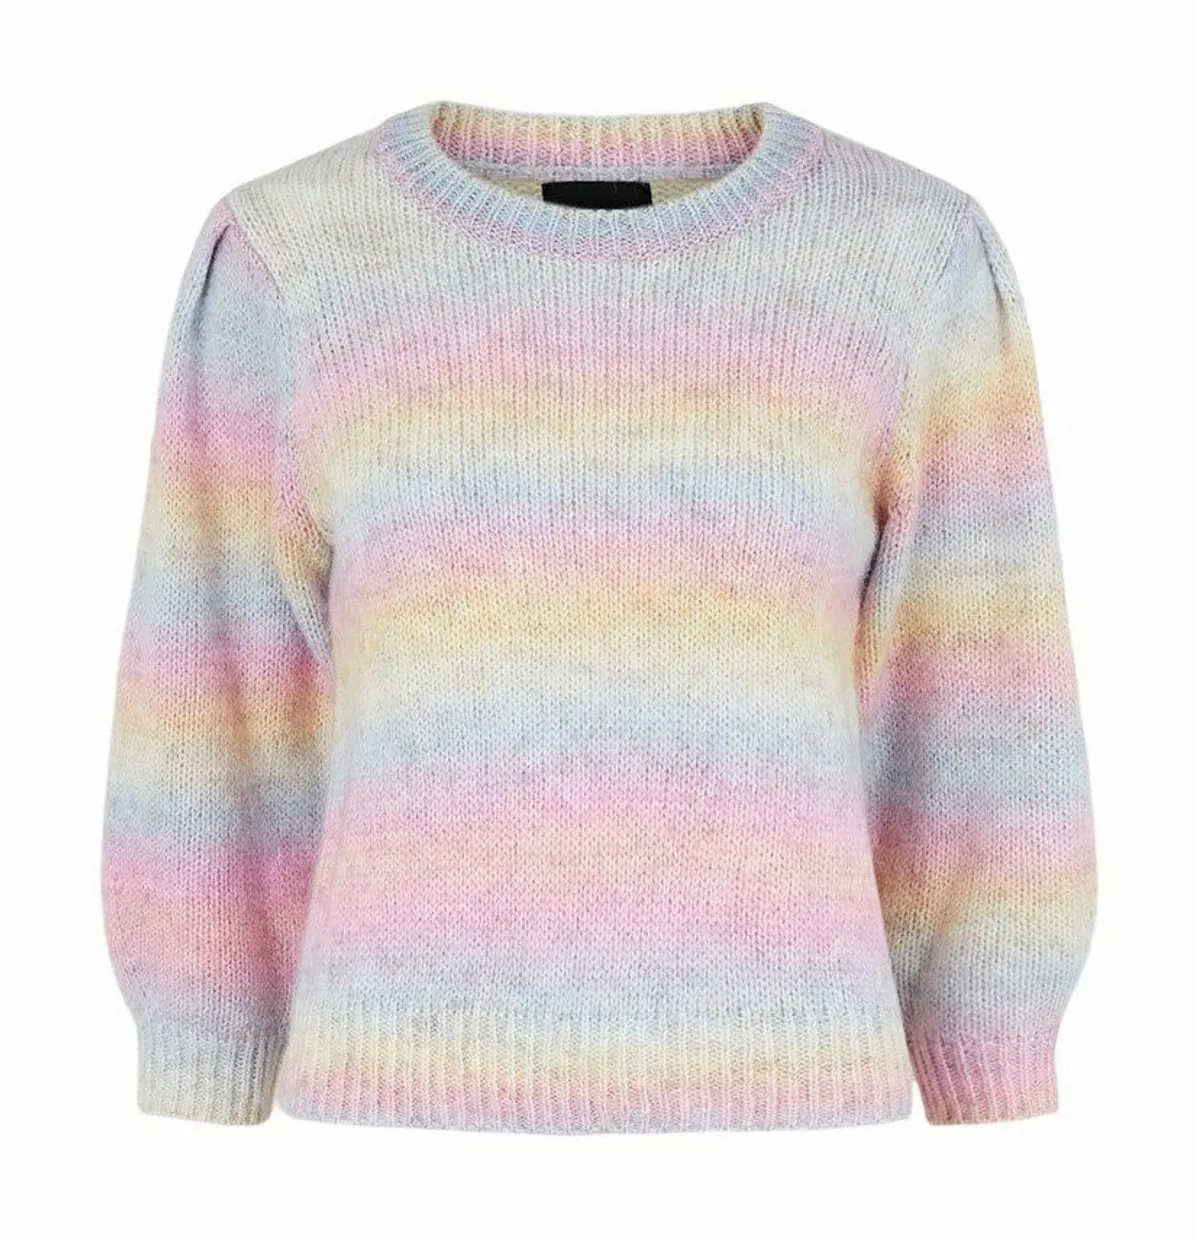 Hudson rainbow knit